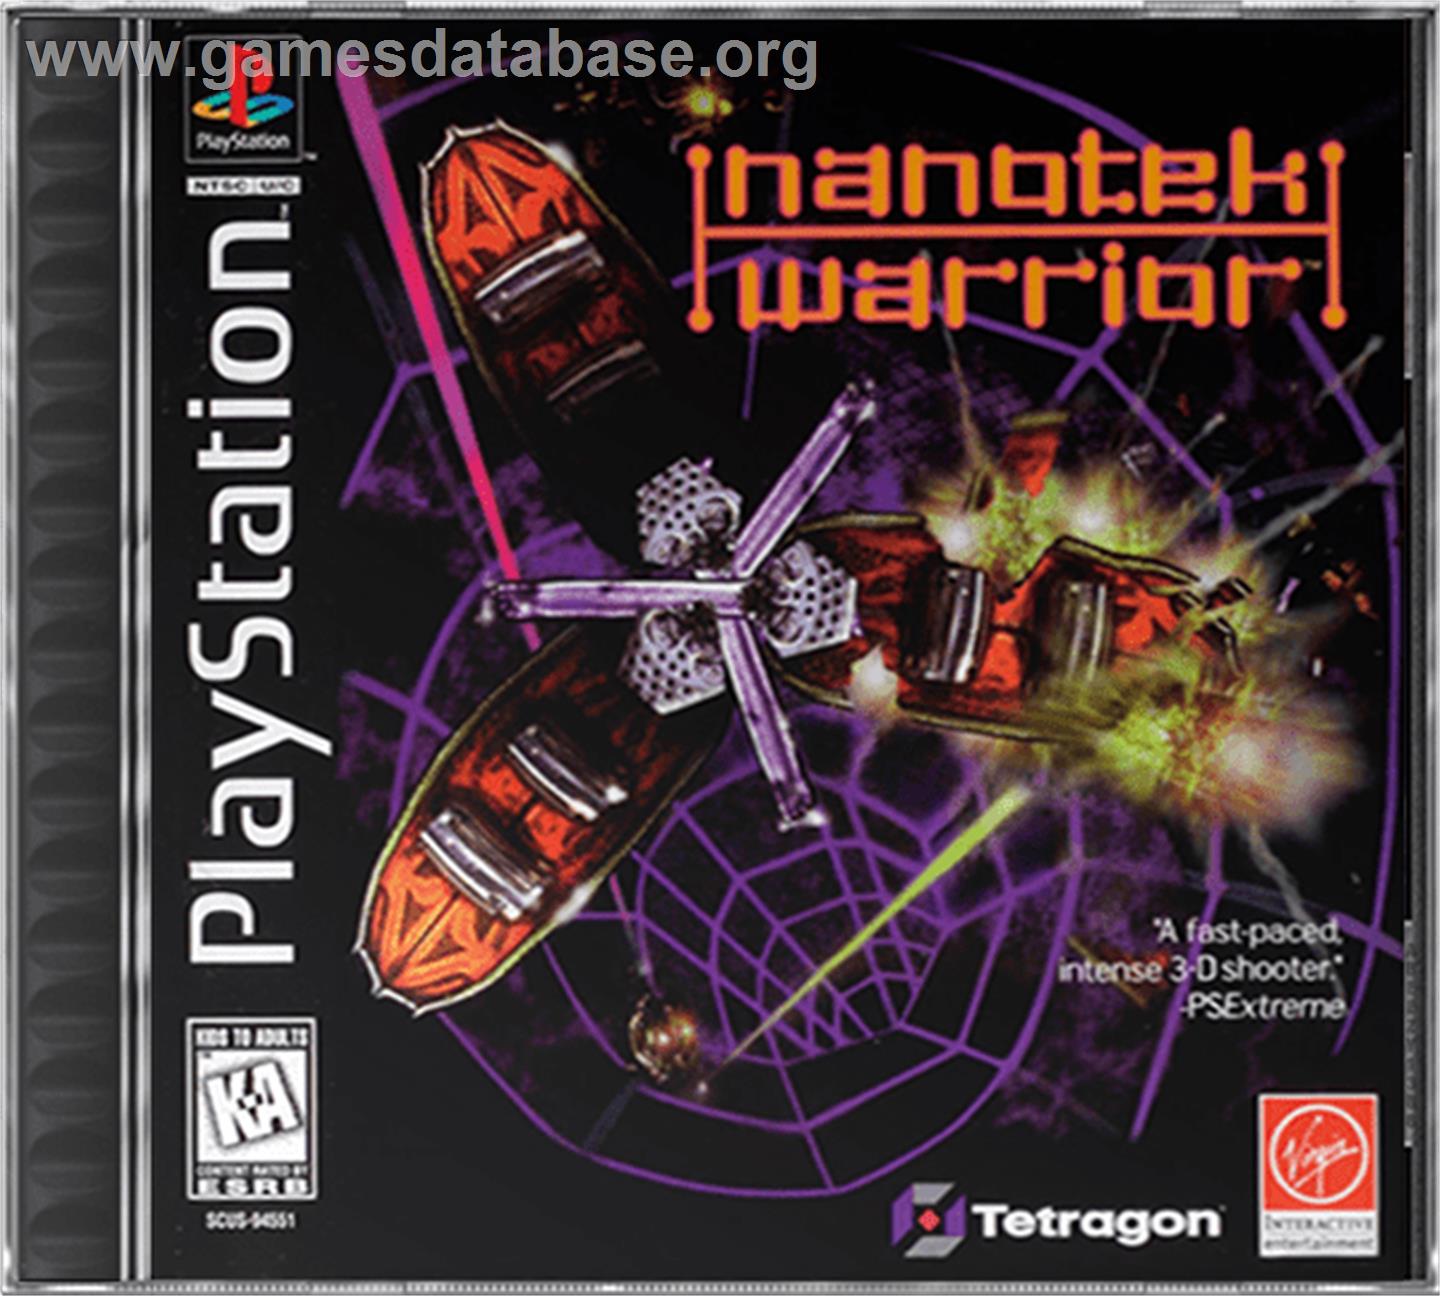 NanoTek Warrior - Sony Playstation - Artwork - Box